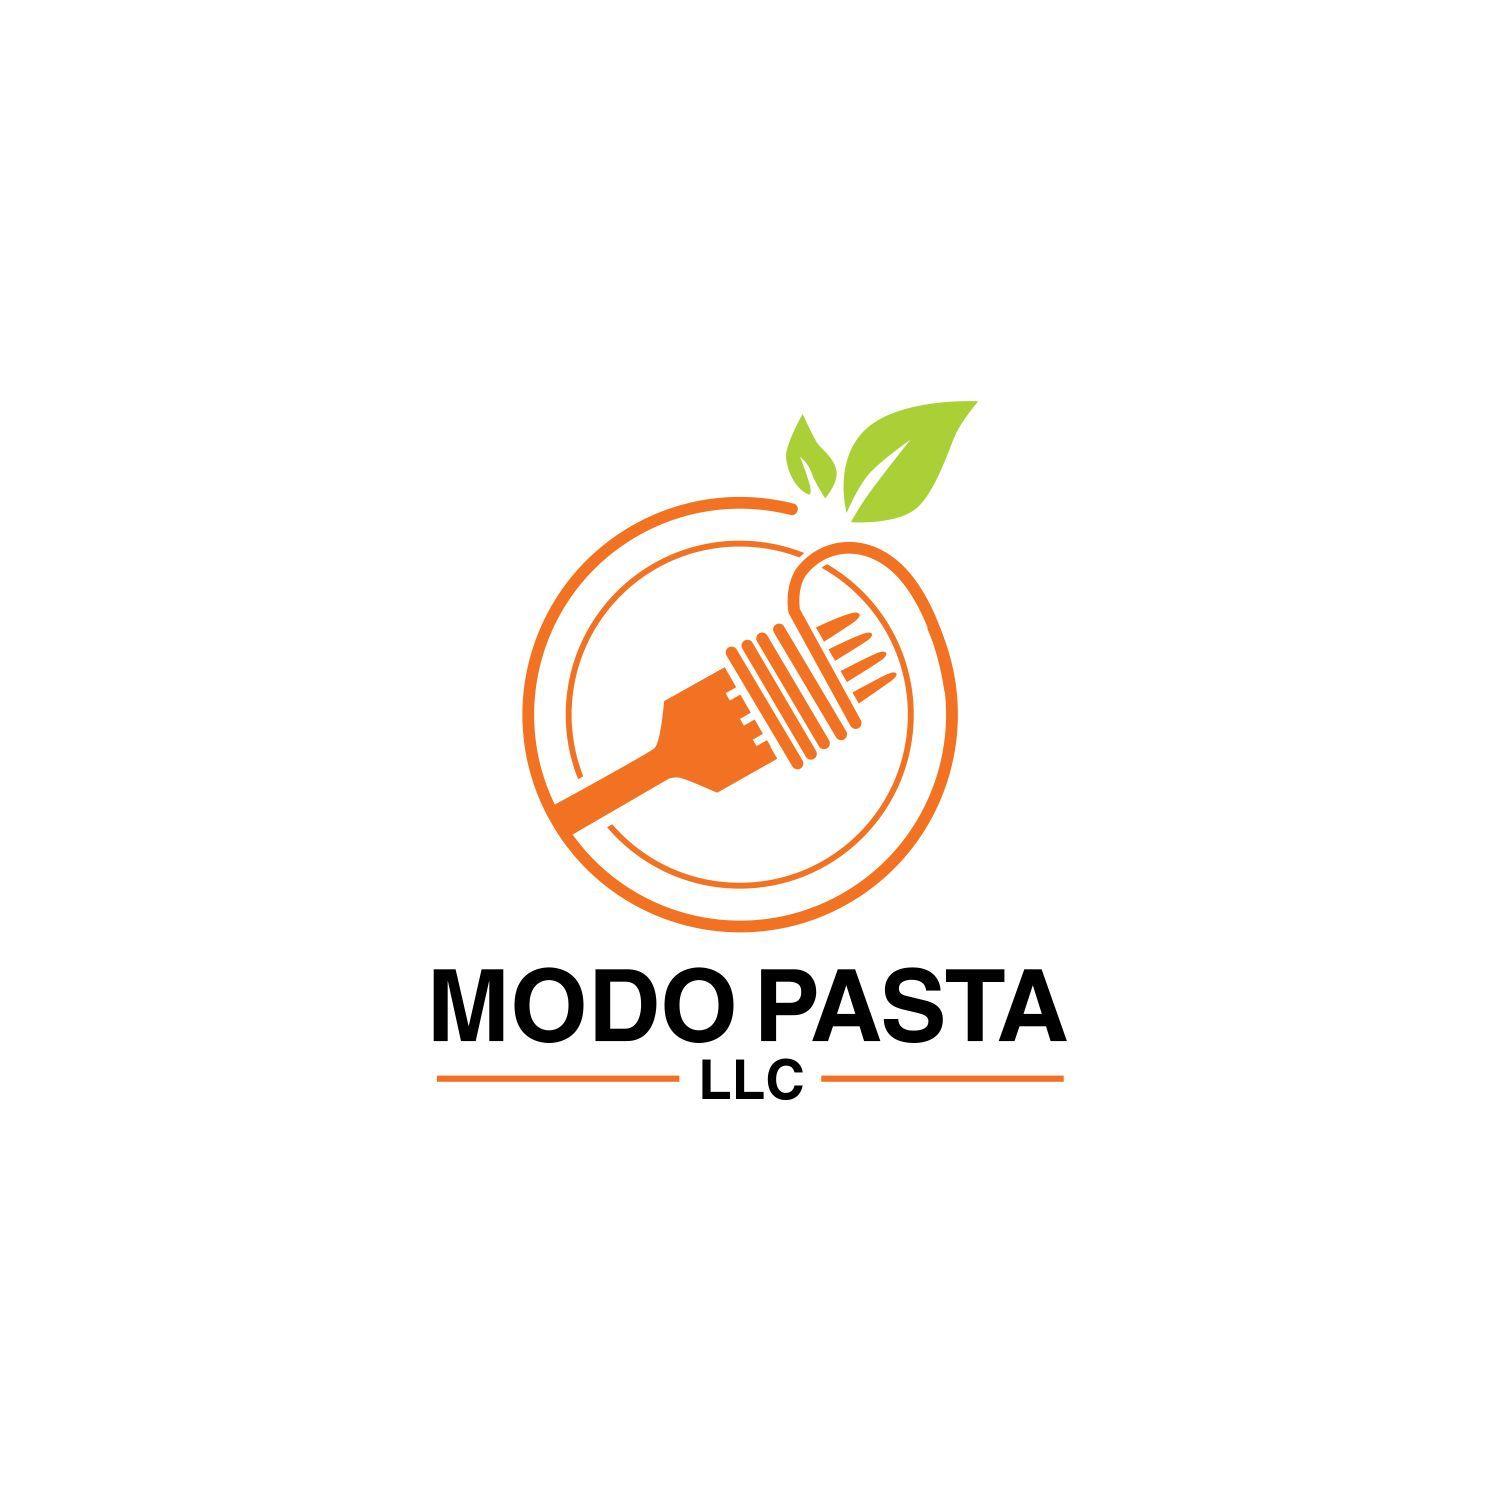 Pasta Logo - Bold, Modern, Fast Food Restaurant Logo Design for MODO PASTA llc